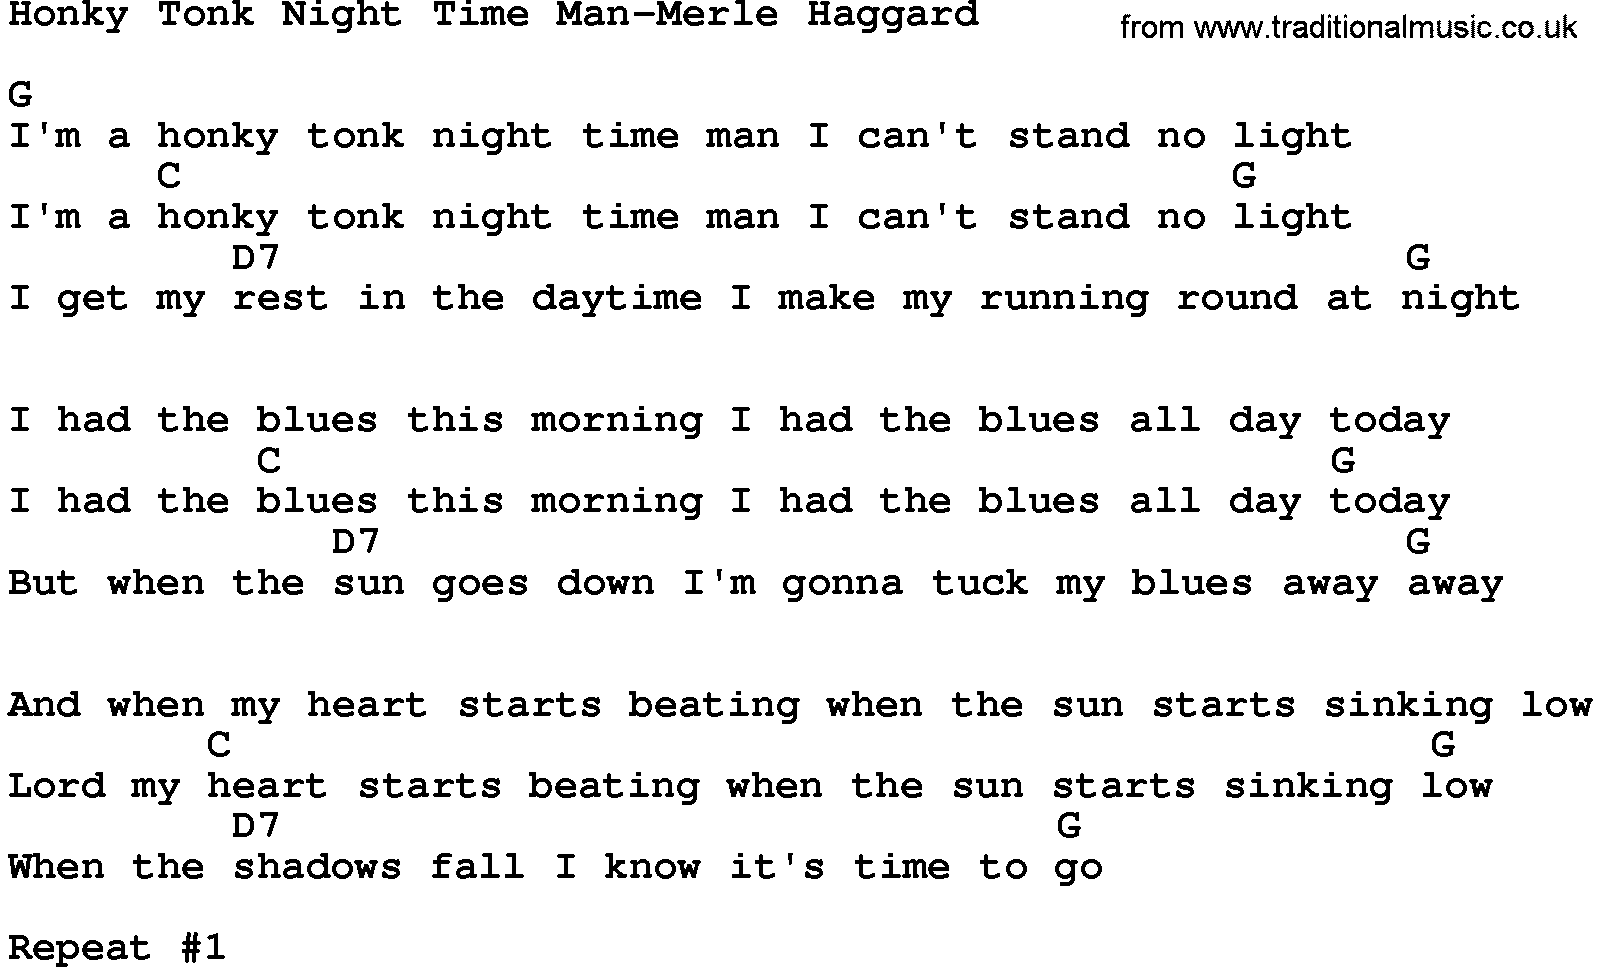 Country music song: Honky Tonk Night Time Man-Merle Haggard lyrics and chords